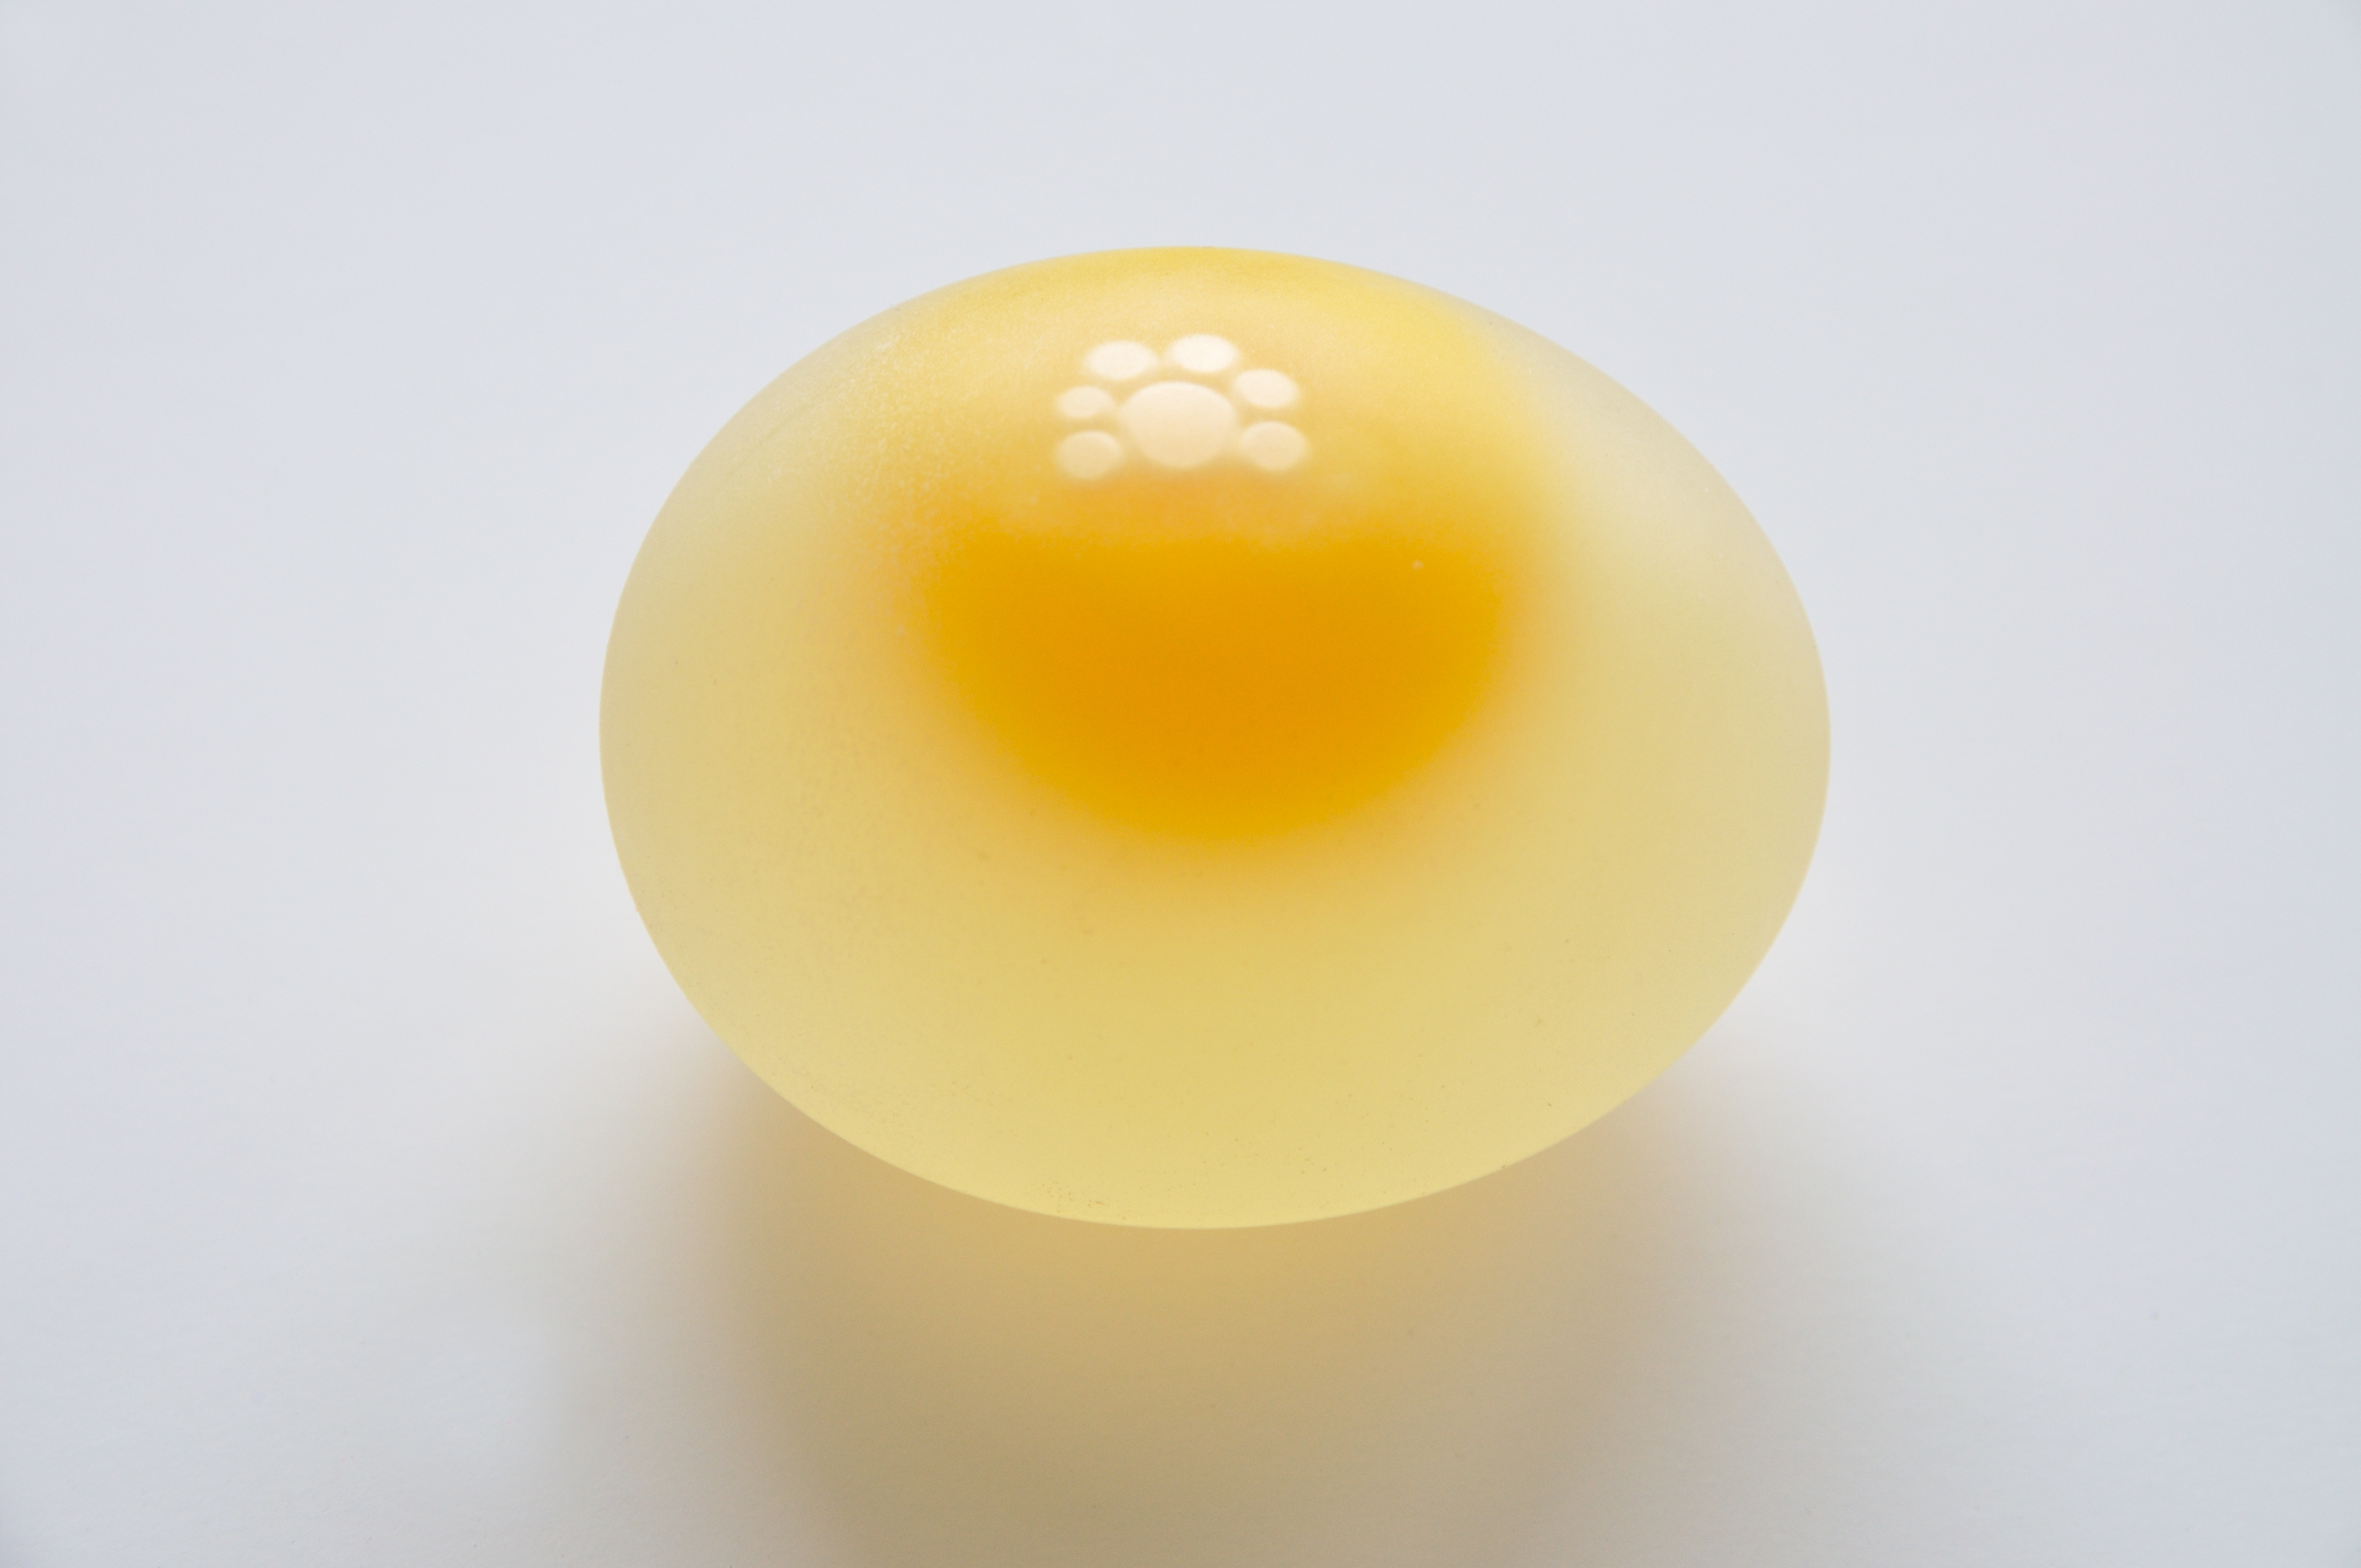 Egg as food - Wikipedia